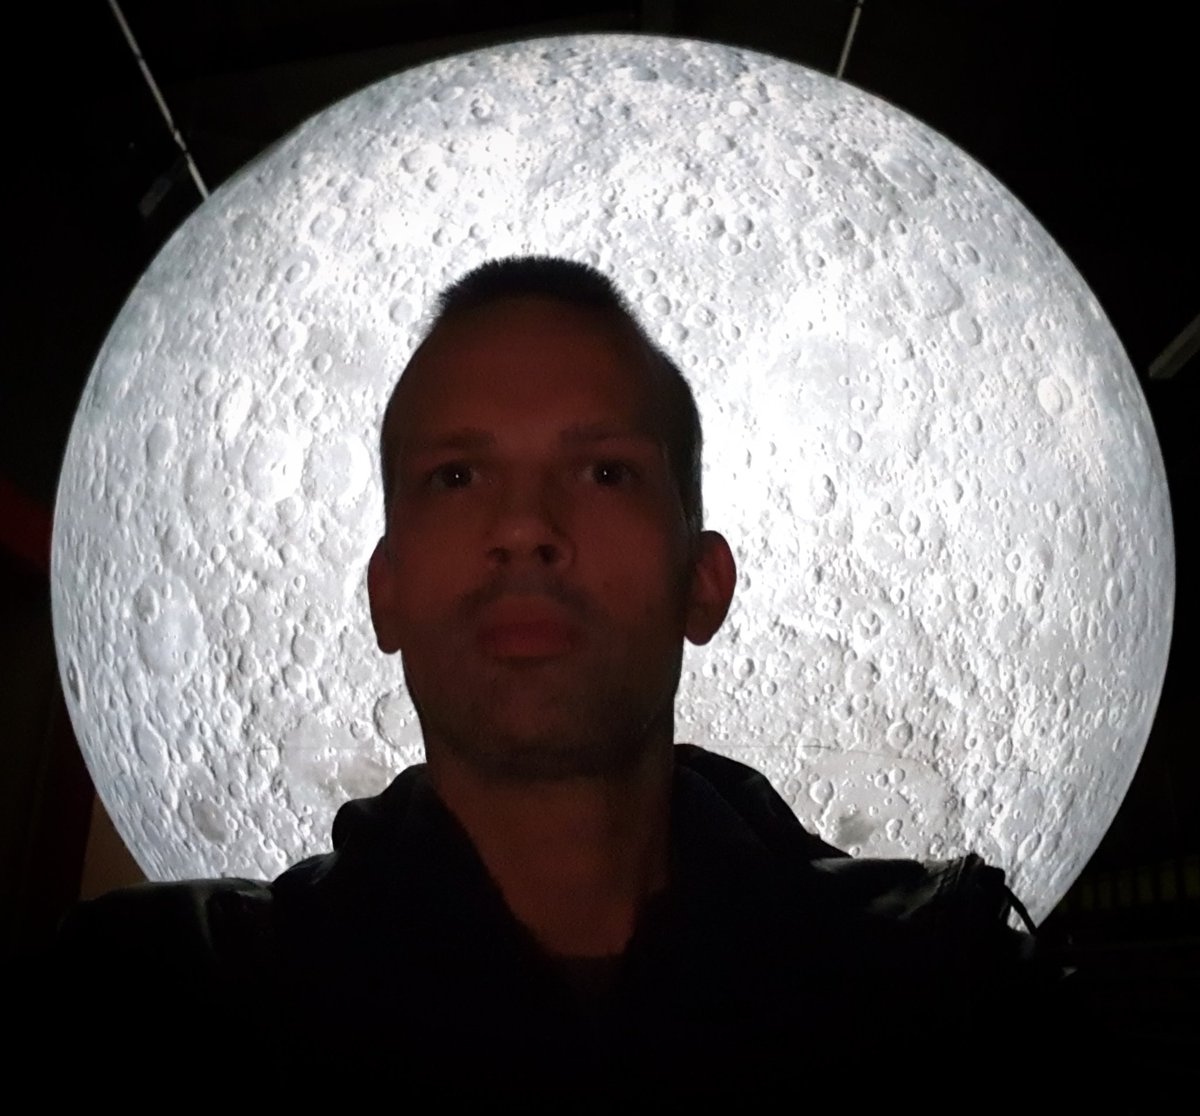 Finally made it to the moon today. Impressive.

#skyranmoon